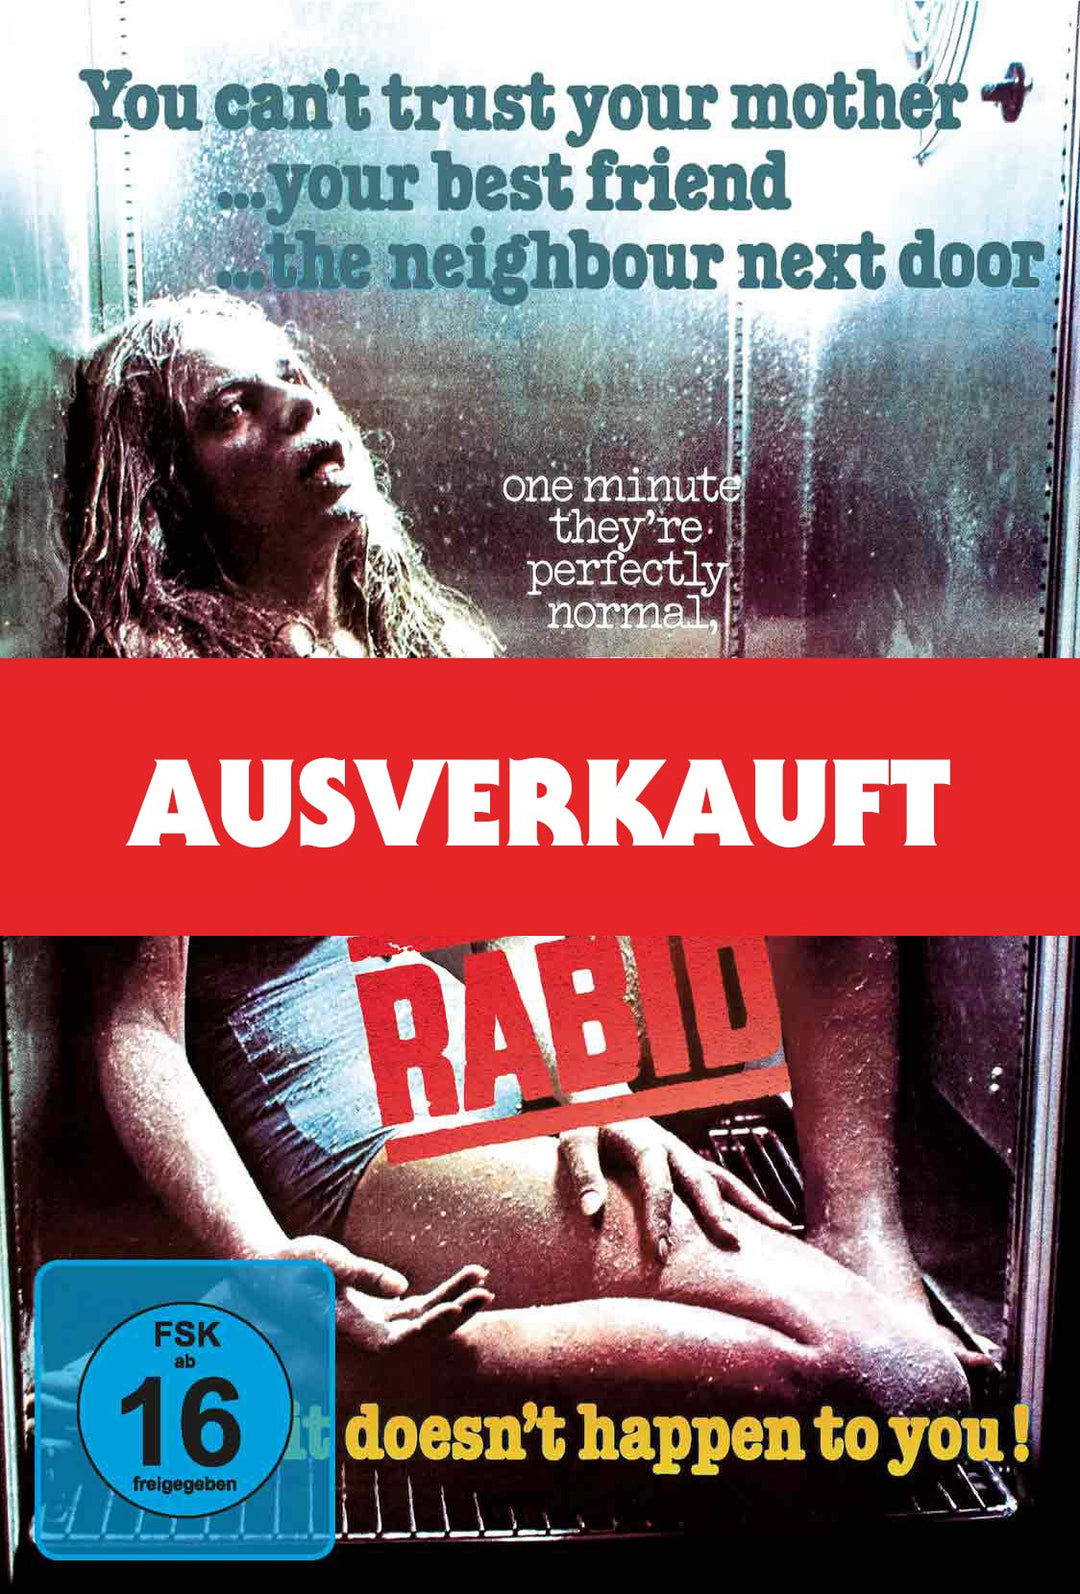 David Cronenberg's Rabid 2-Disc Limited Edition